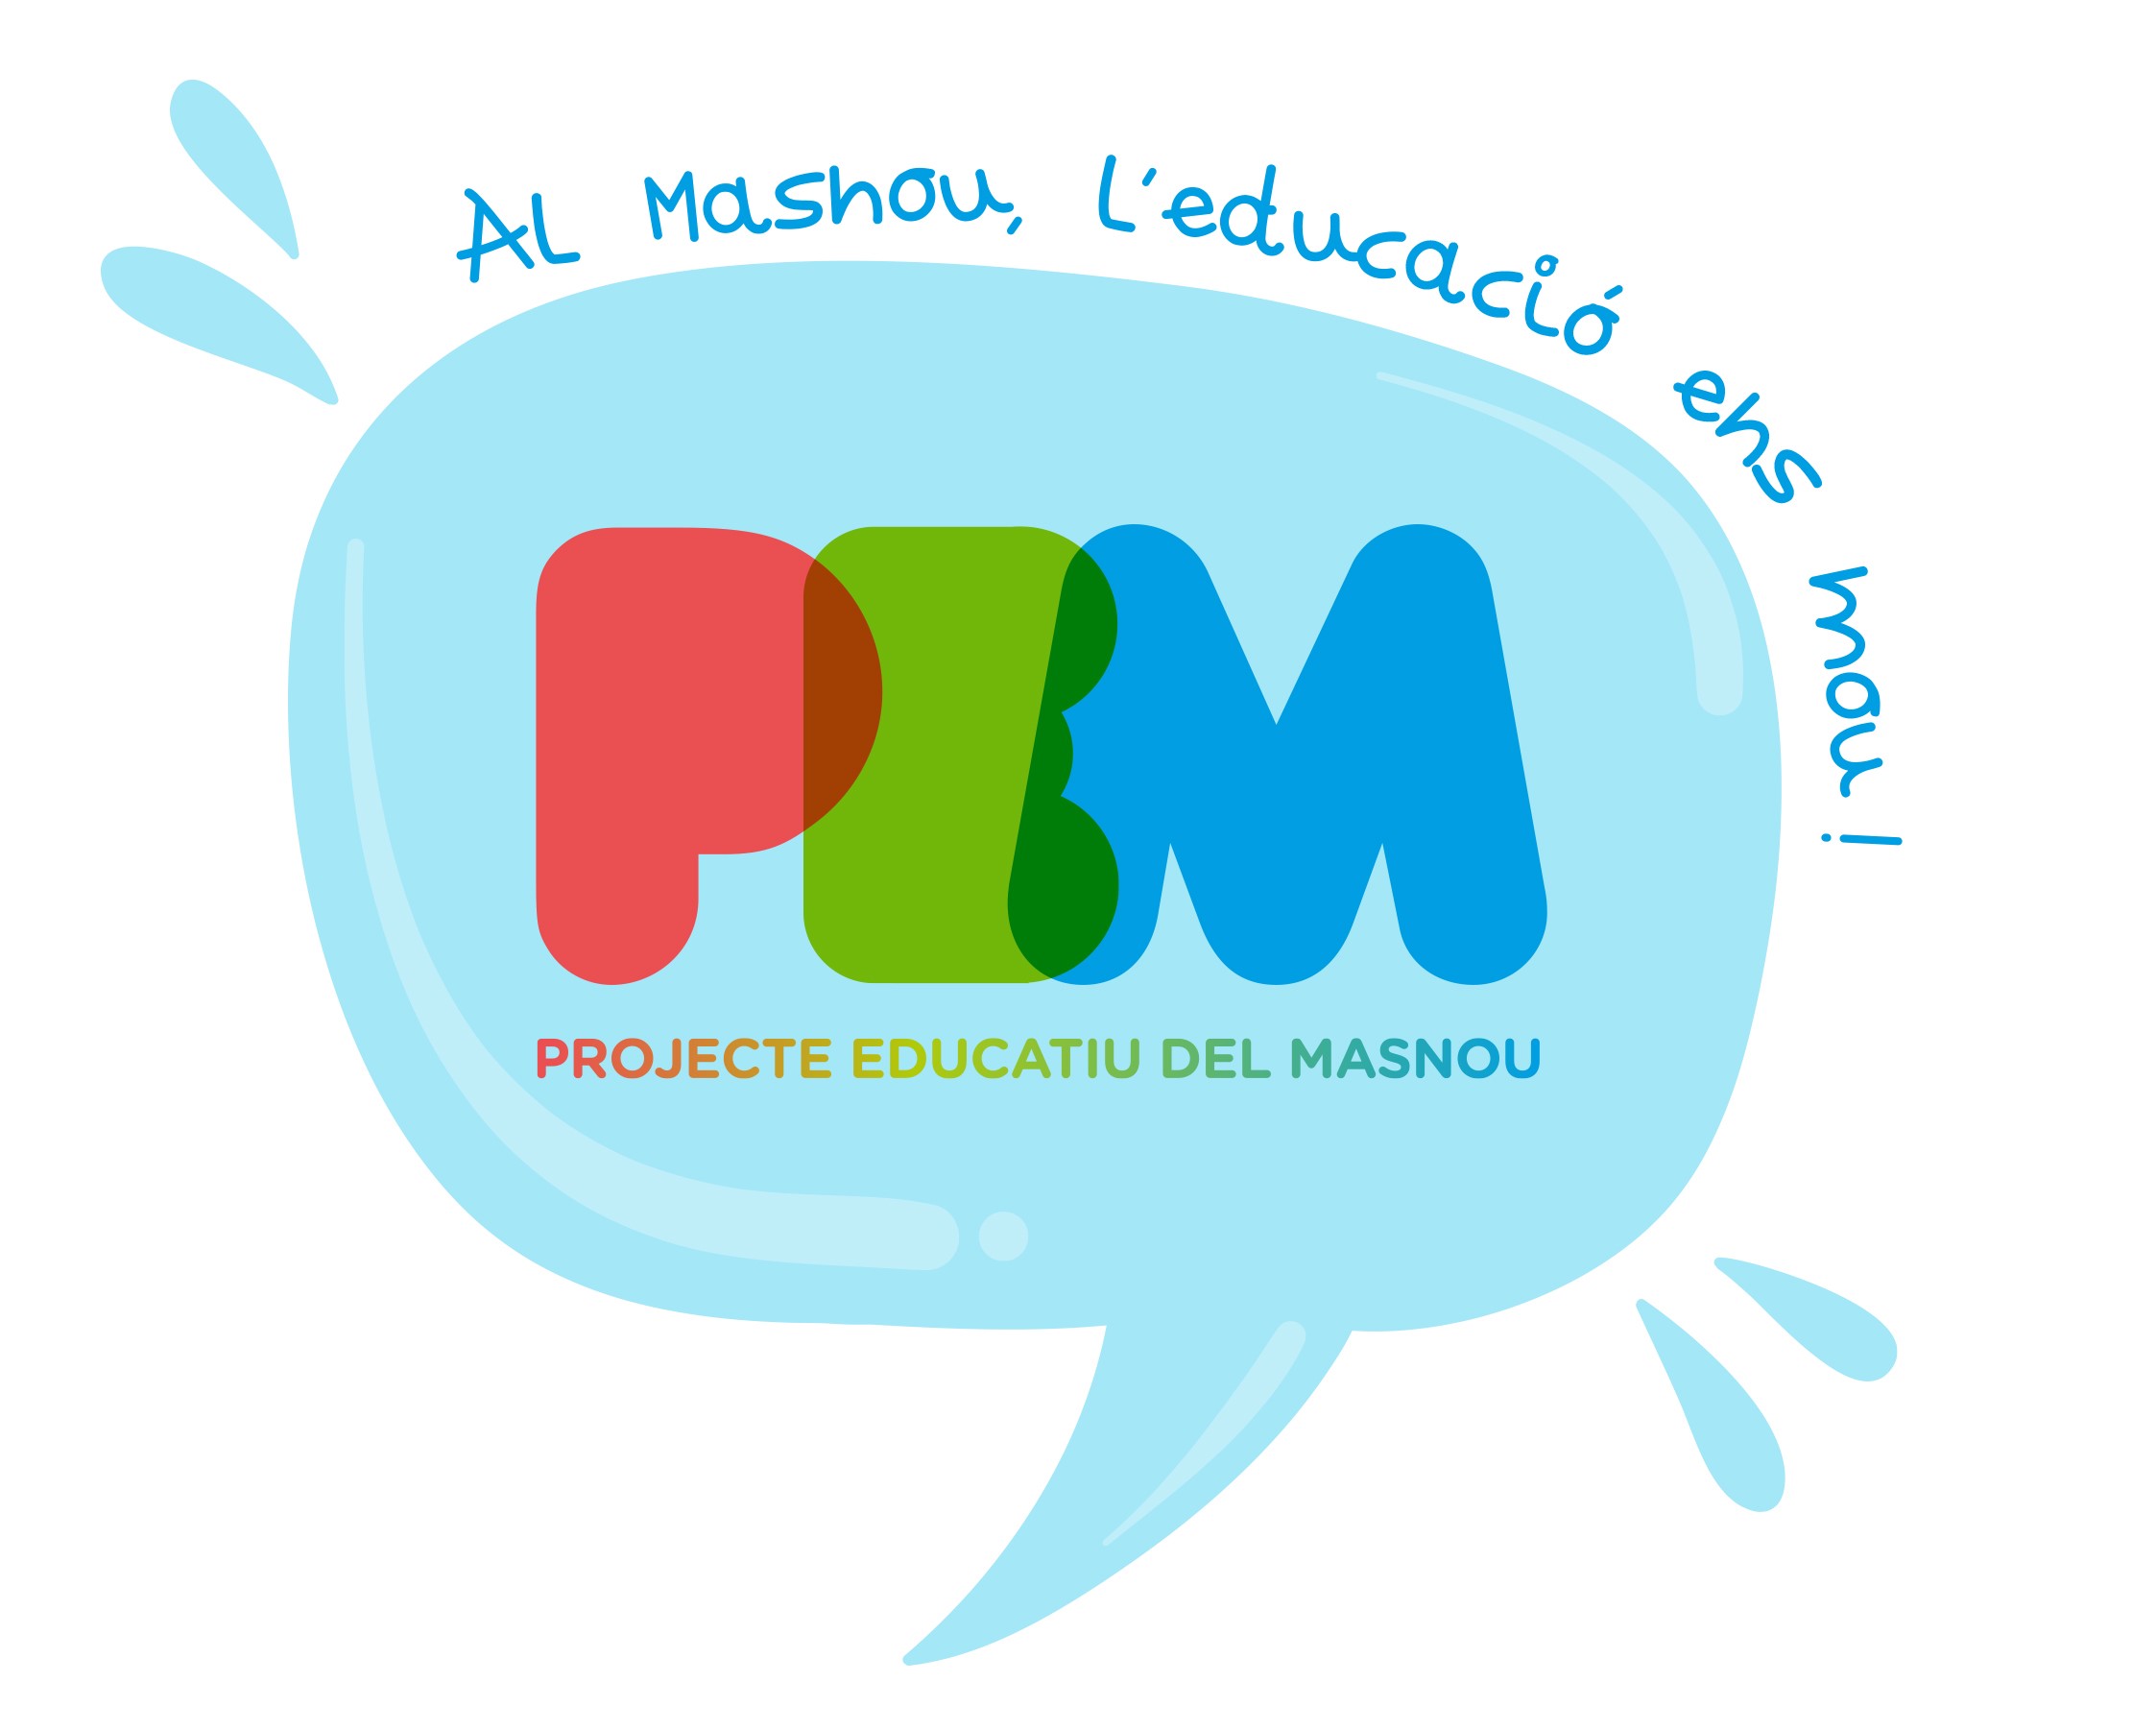 Jornada del Projecte educatiu del Masnou